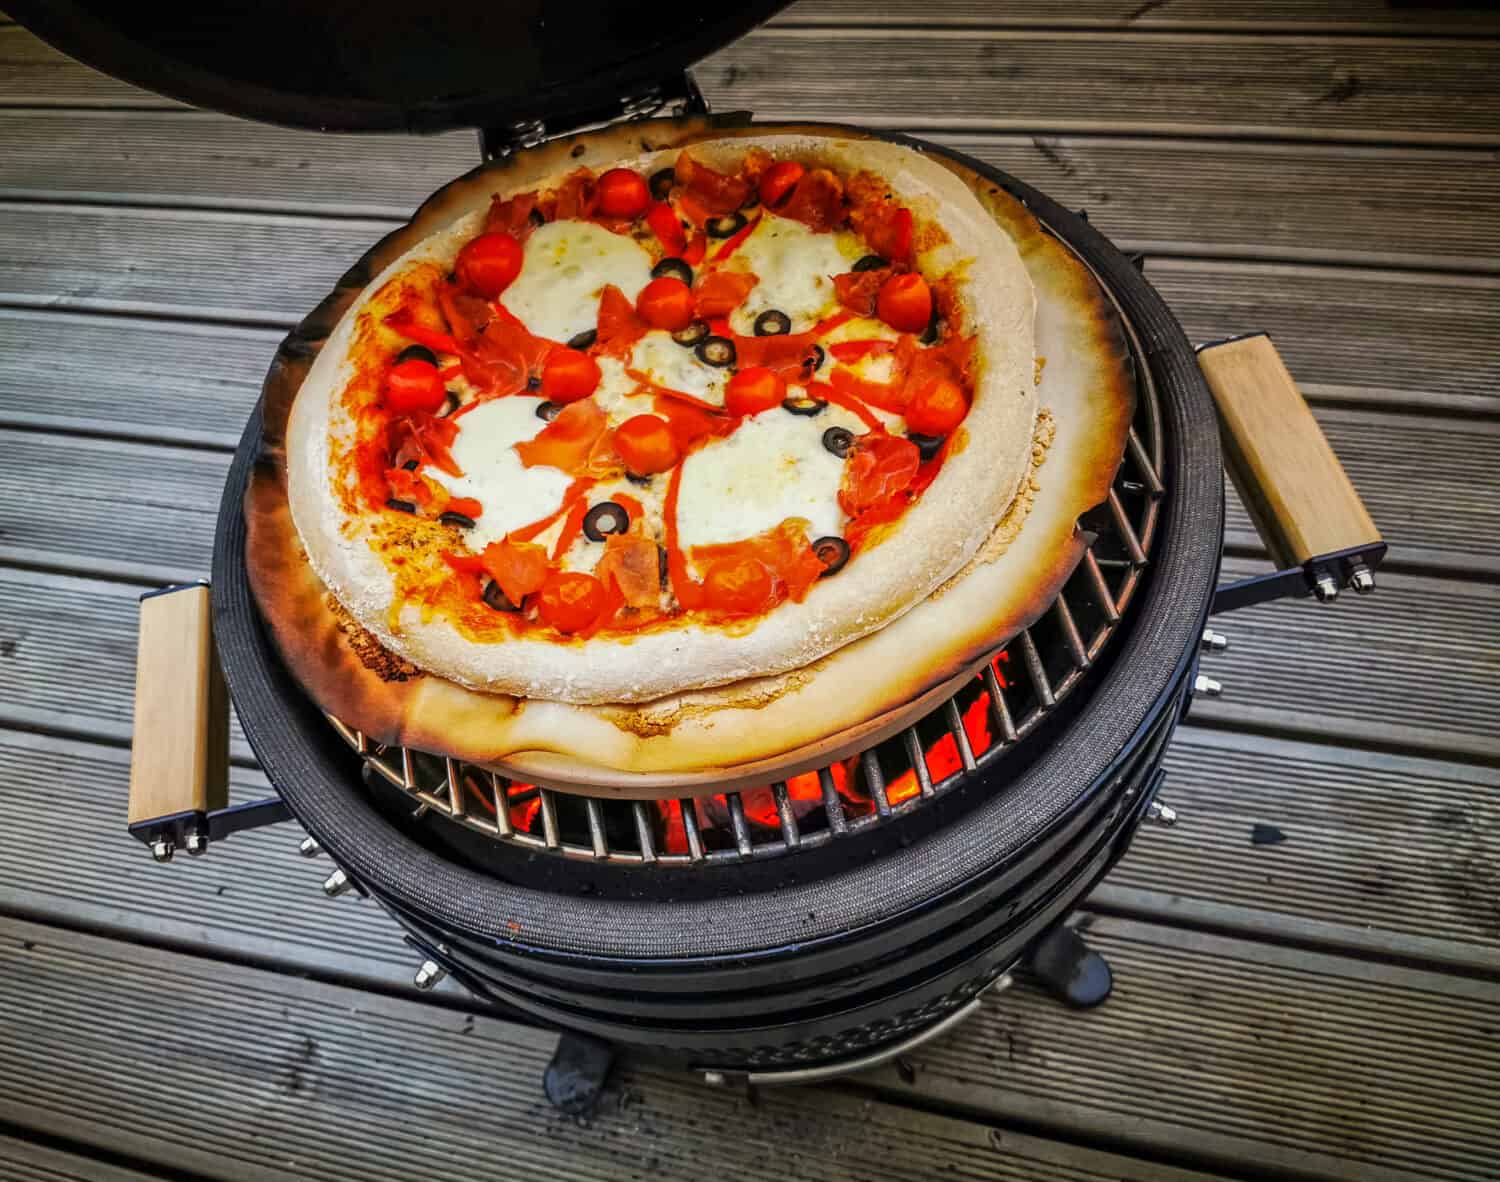 Homemade pizza baked on a kamado cook stove